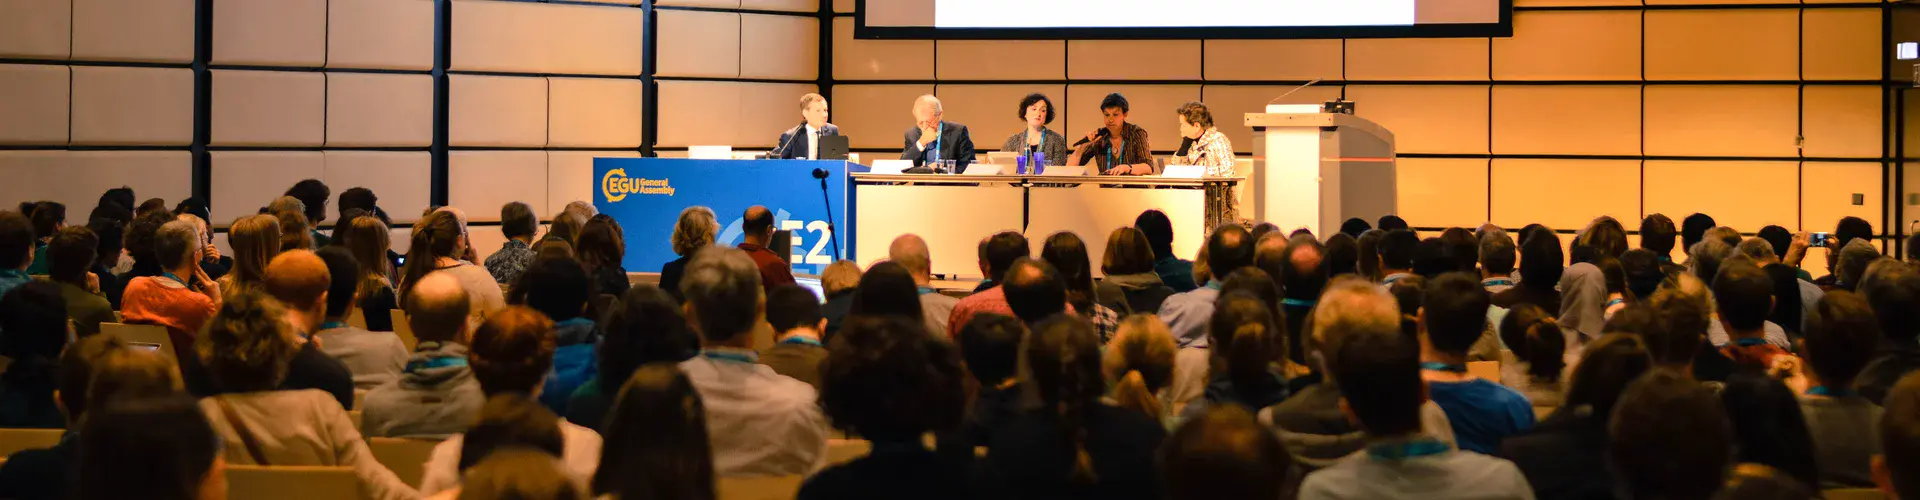 Scientists at a Union Symposium during the EGU 2017 General Assembly (Credit: Kai Boggild/EGU)